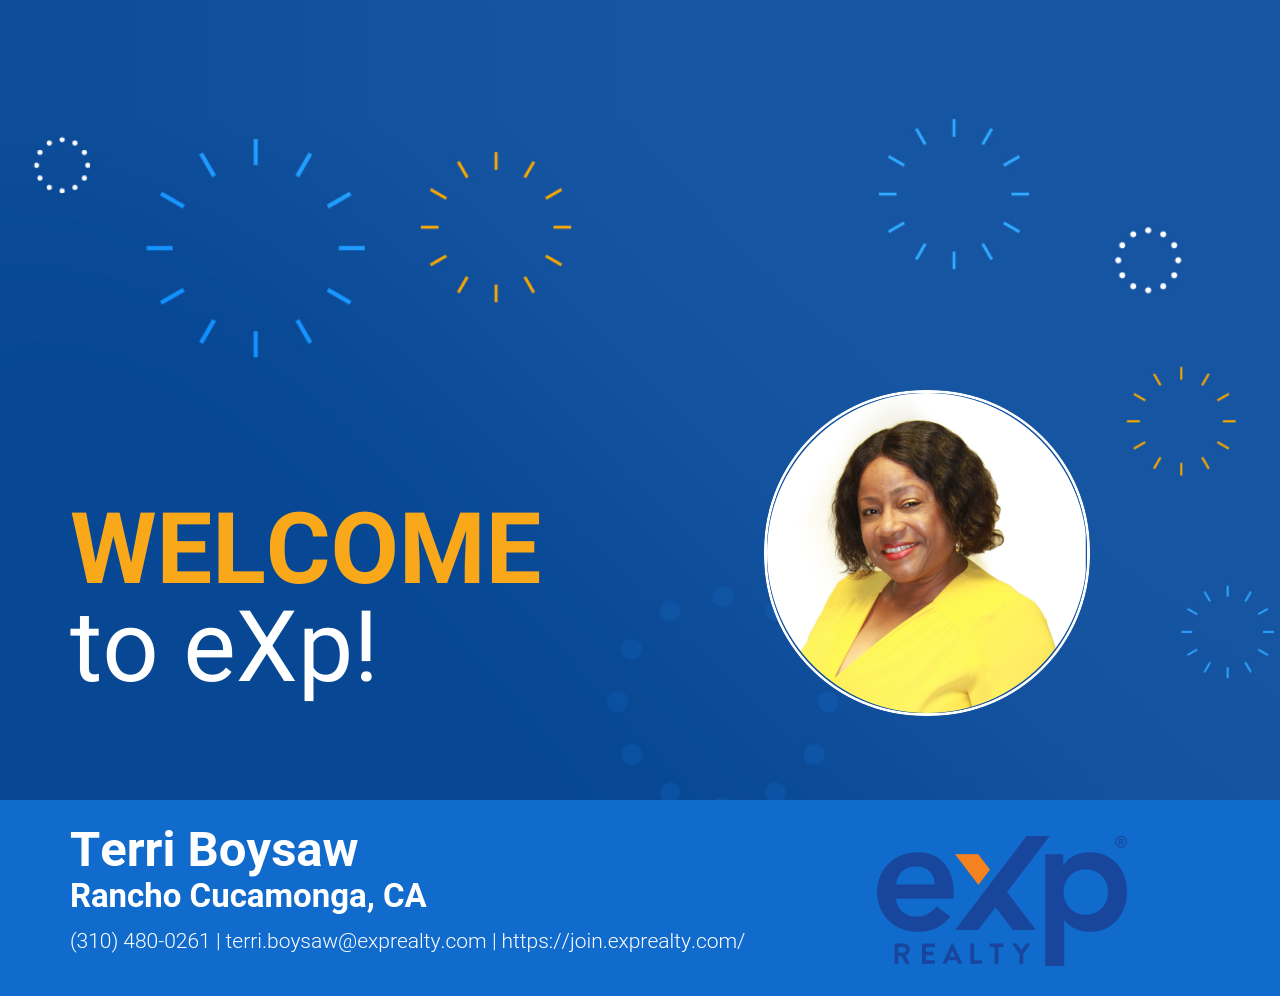 eXp Realty Welcomes Terri Boysaw!